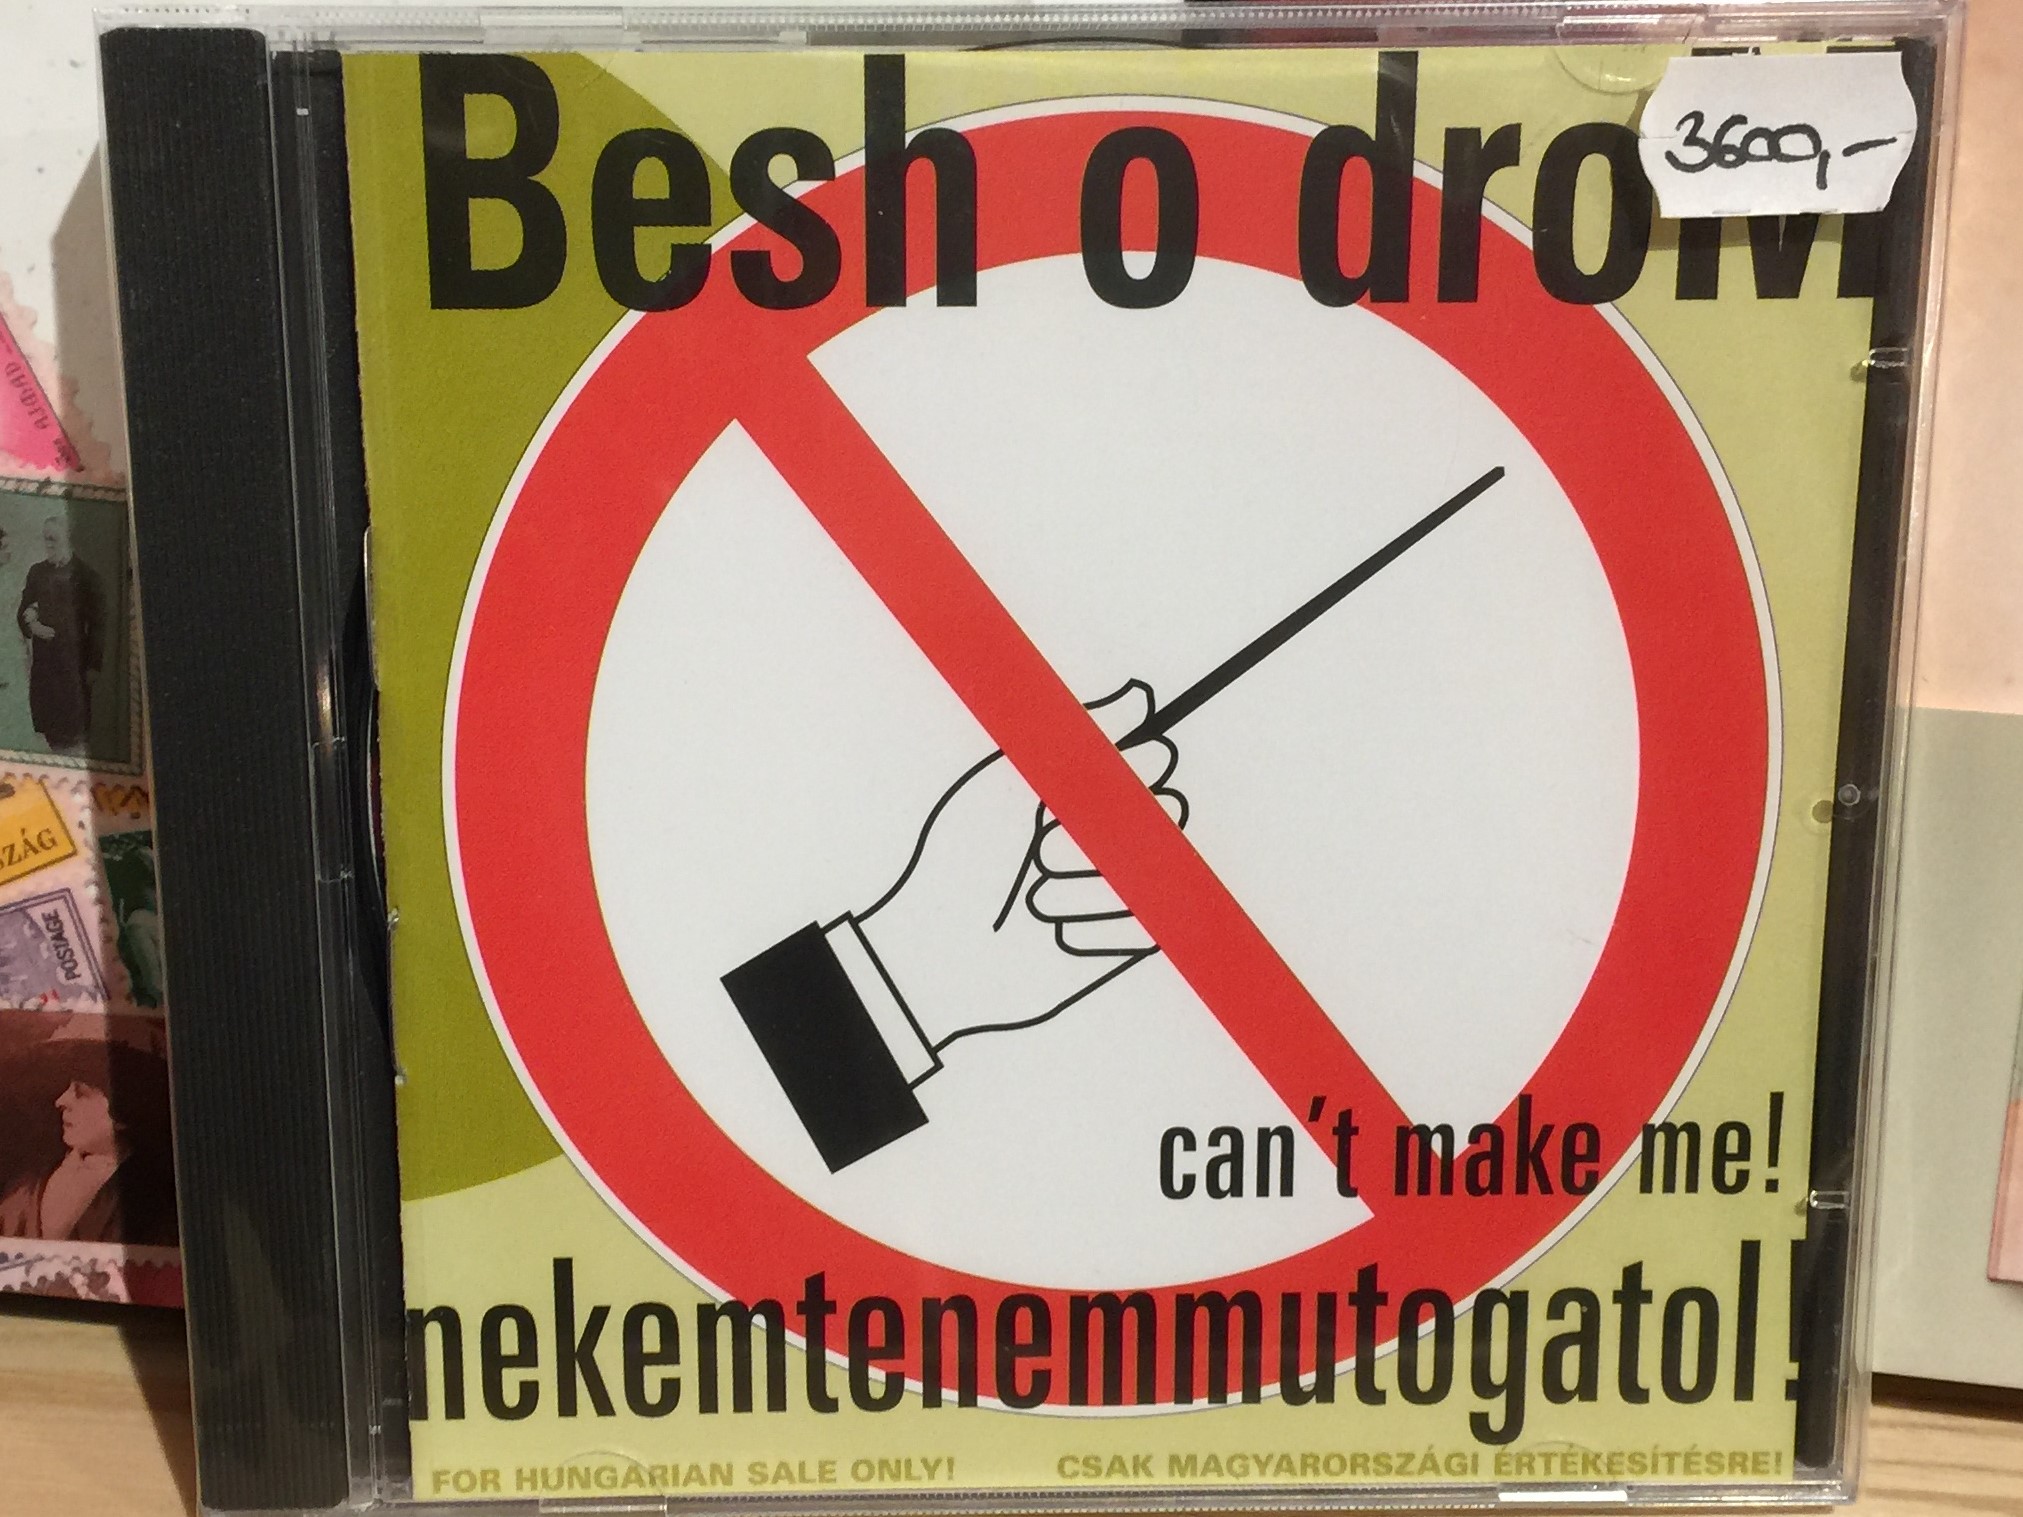 besh-o-drom-nekemtenemmutogatol-can-t-make-me-audio-cd-2002-bod-0202-1-.jpg